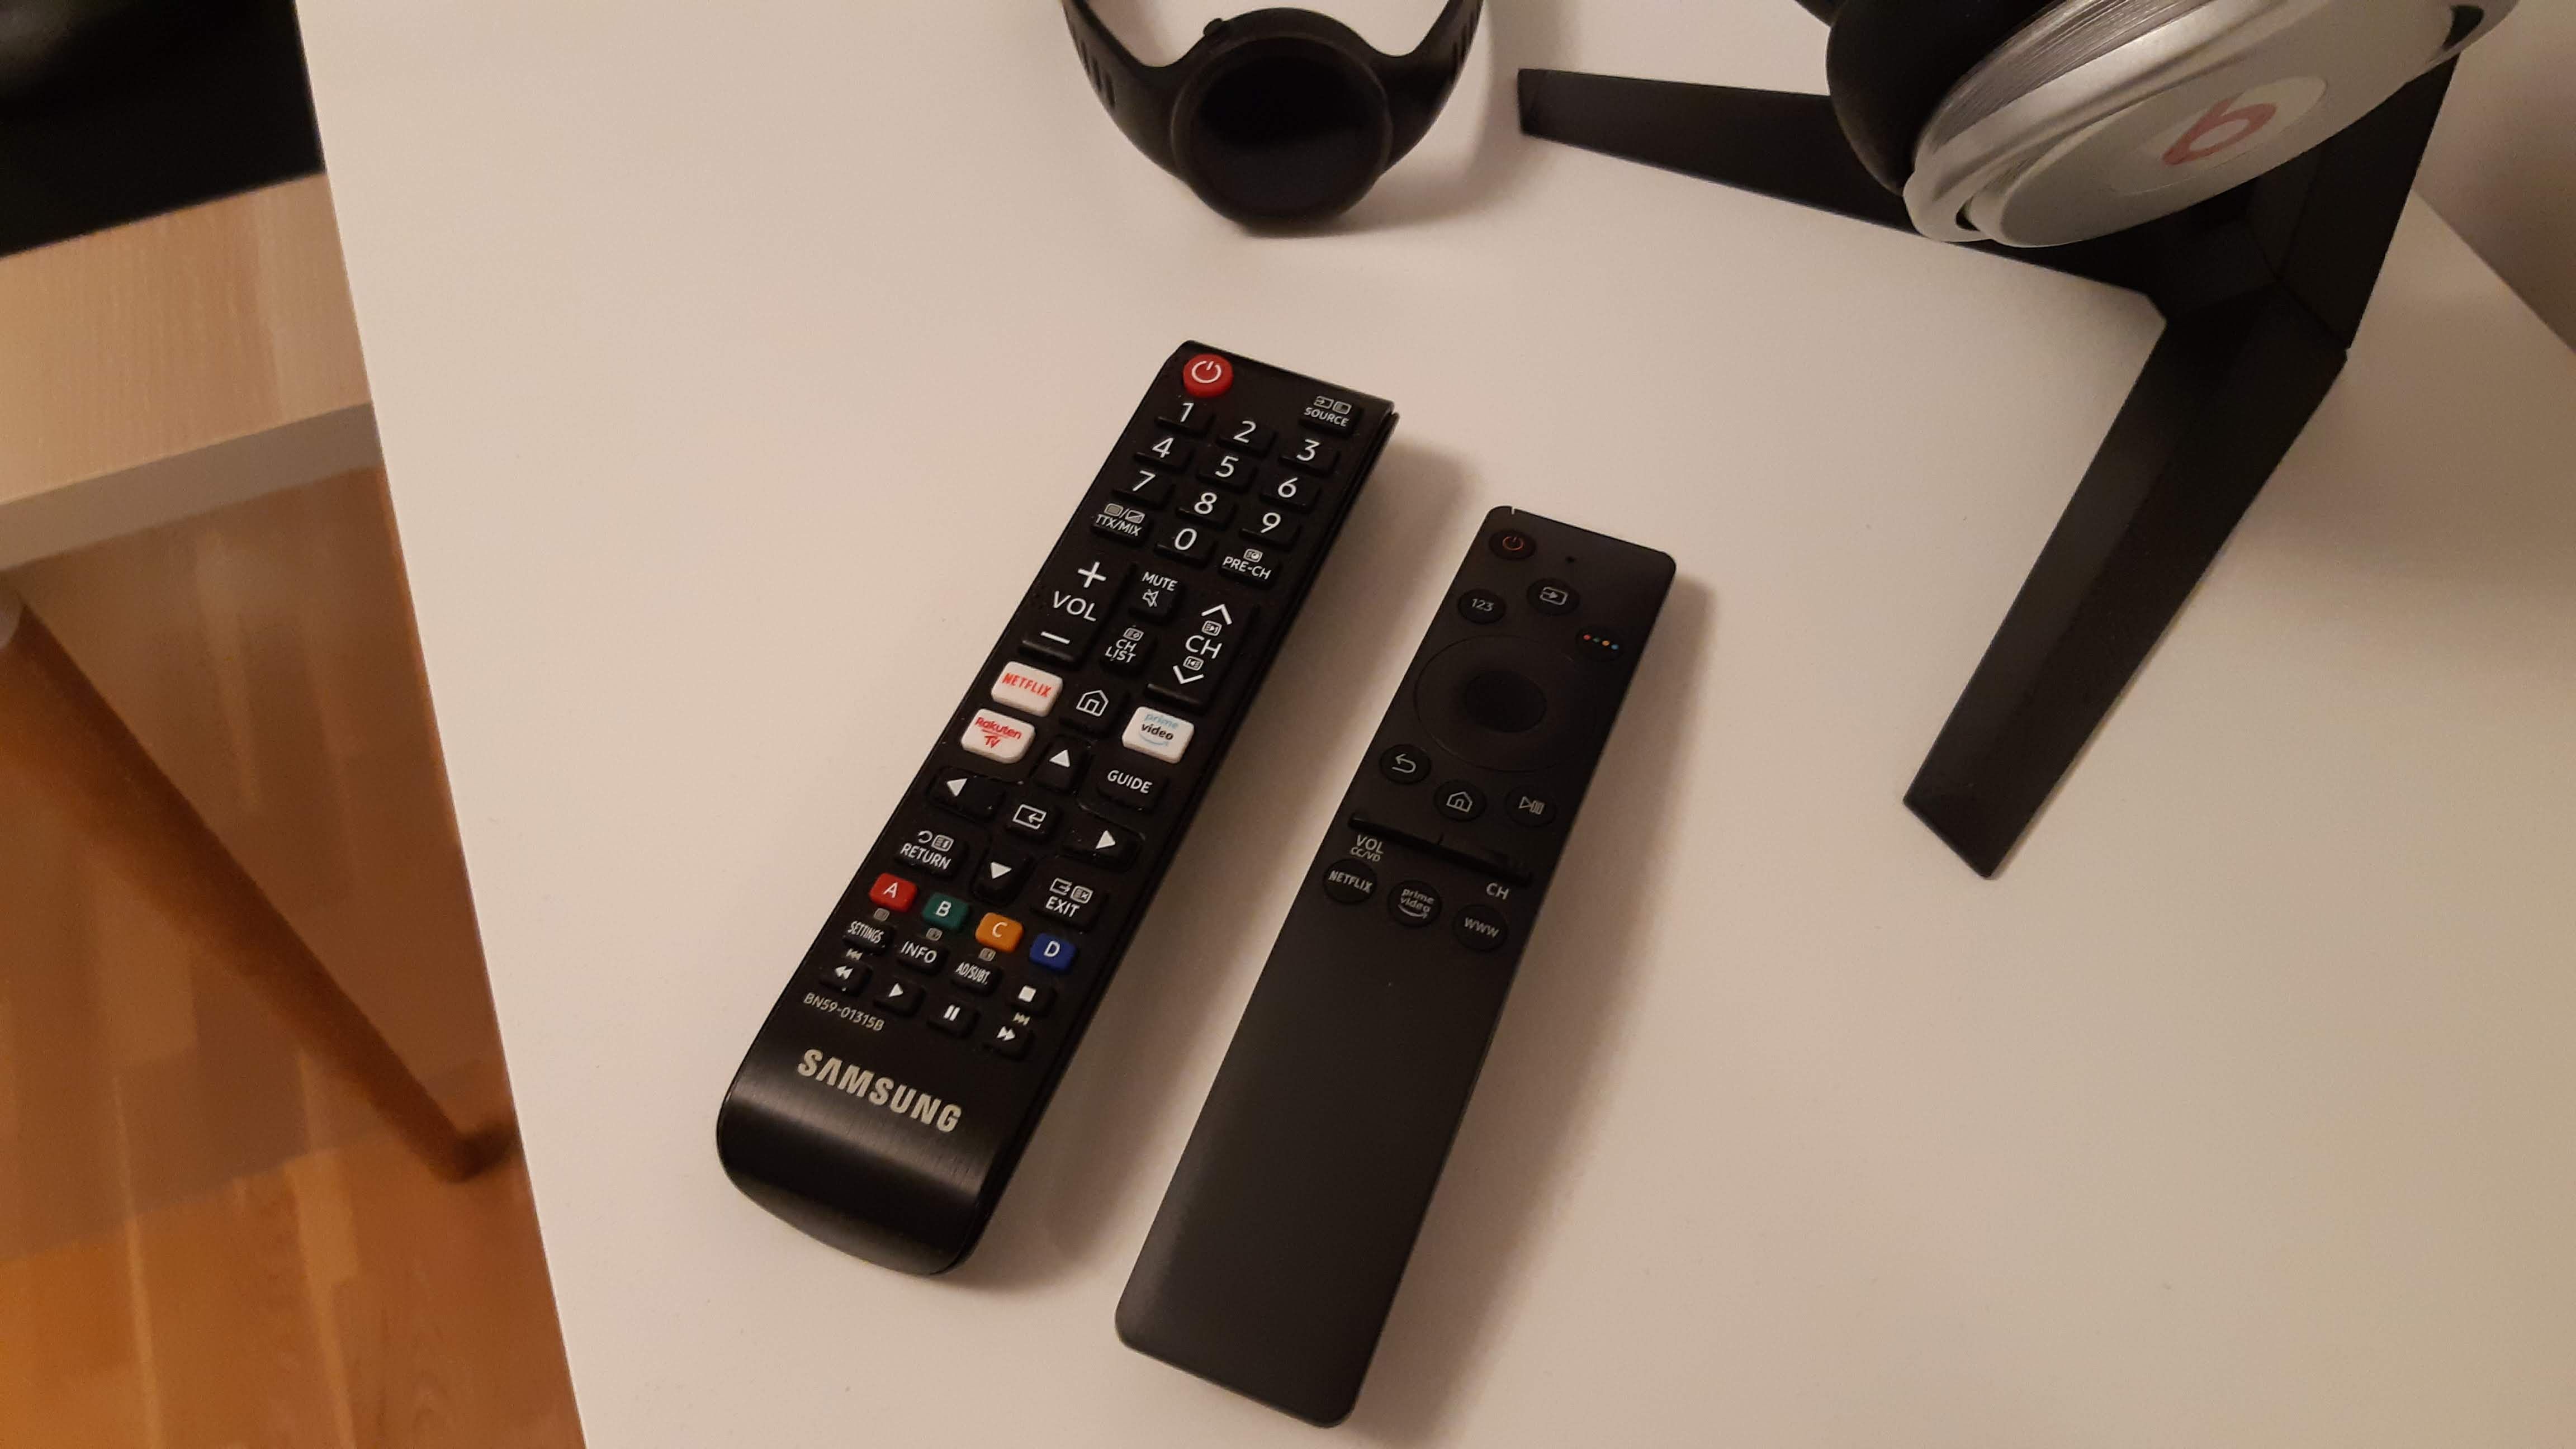 Smart Remote Compatibility with TV Model RU 7100 - Samsung Community